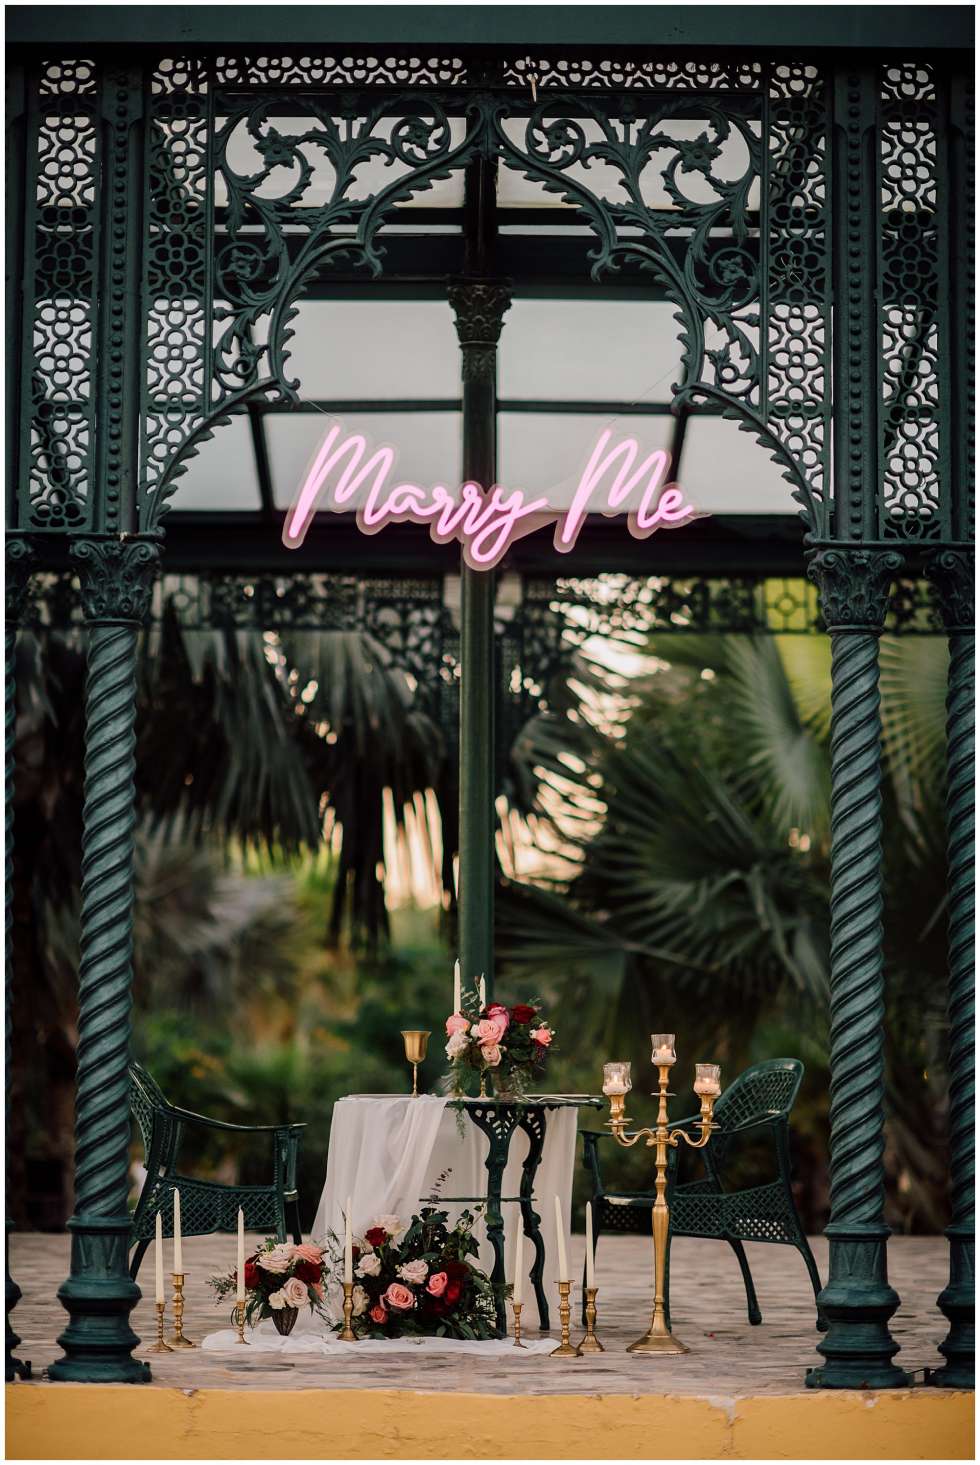 A Romantic Proposal at Melia Desert Palm in Dubai 2